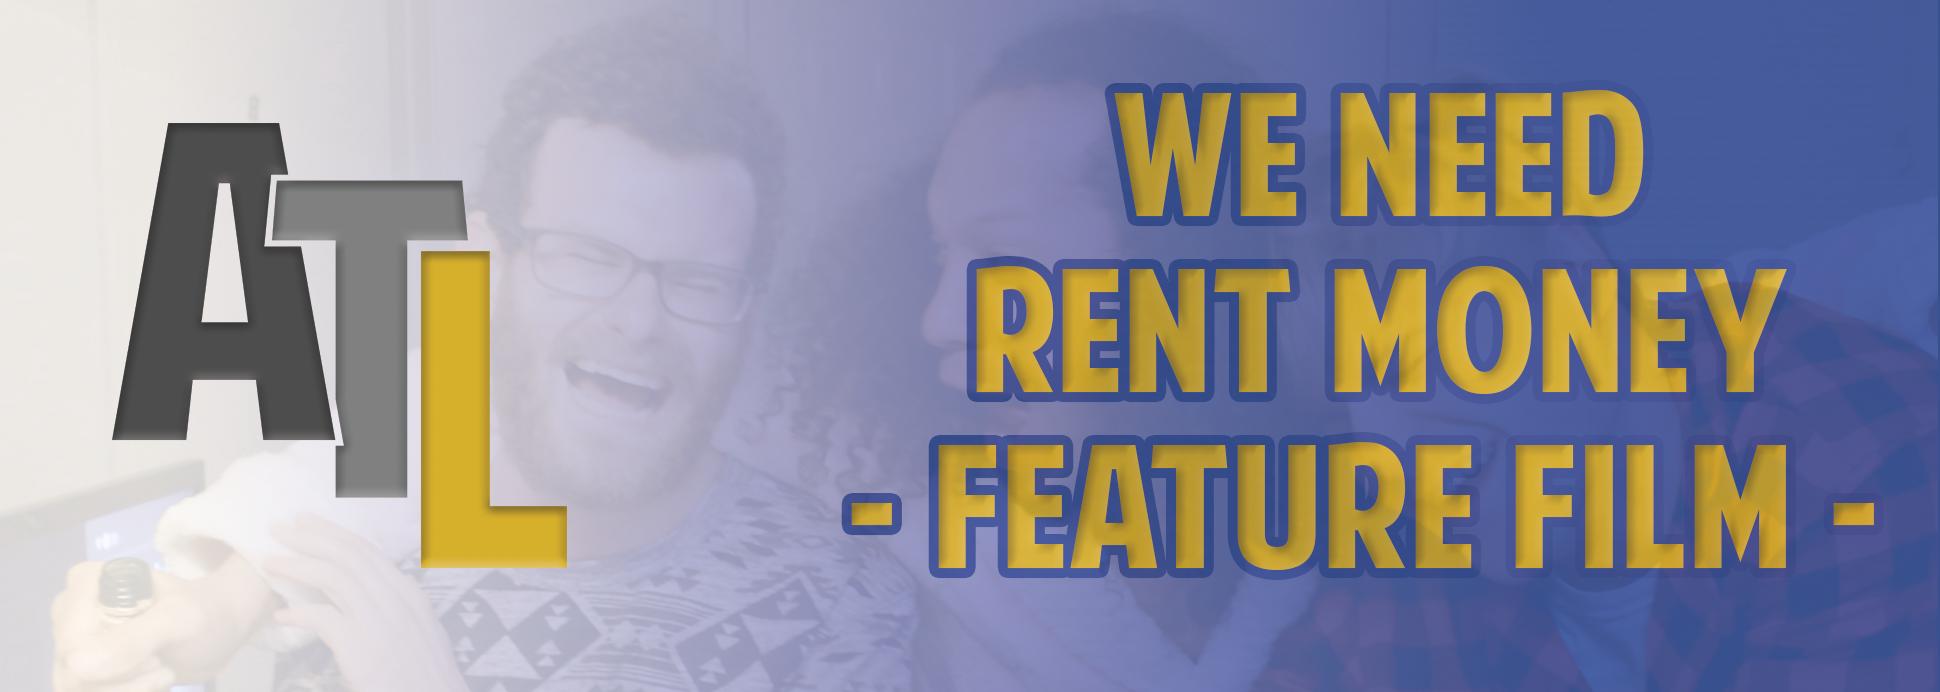 Feature Film - We Need Rent Money